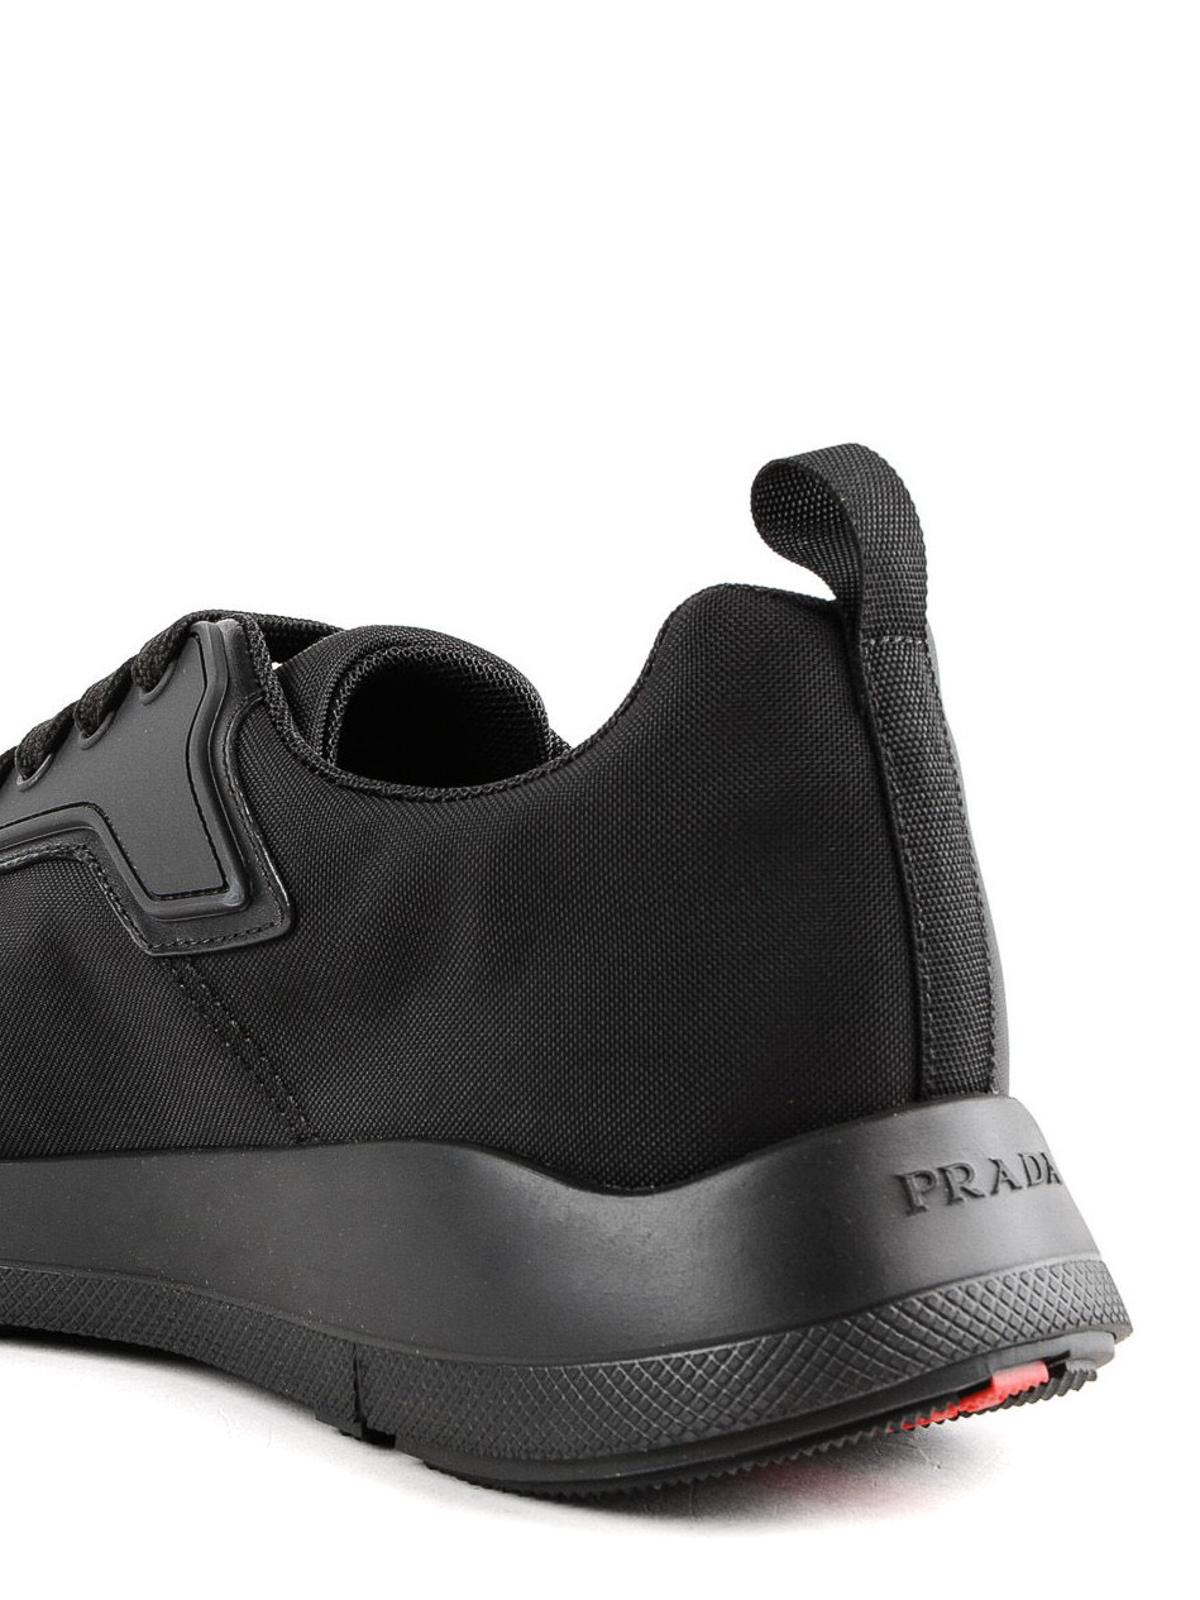 Sportschool meer Titicaca Asser Trainers Prada - Black Fly sneakers - 4E3148OOL002 | Shop online at iKRIX